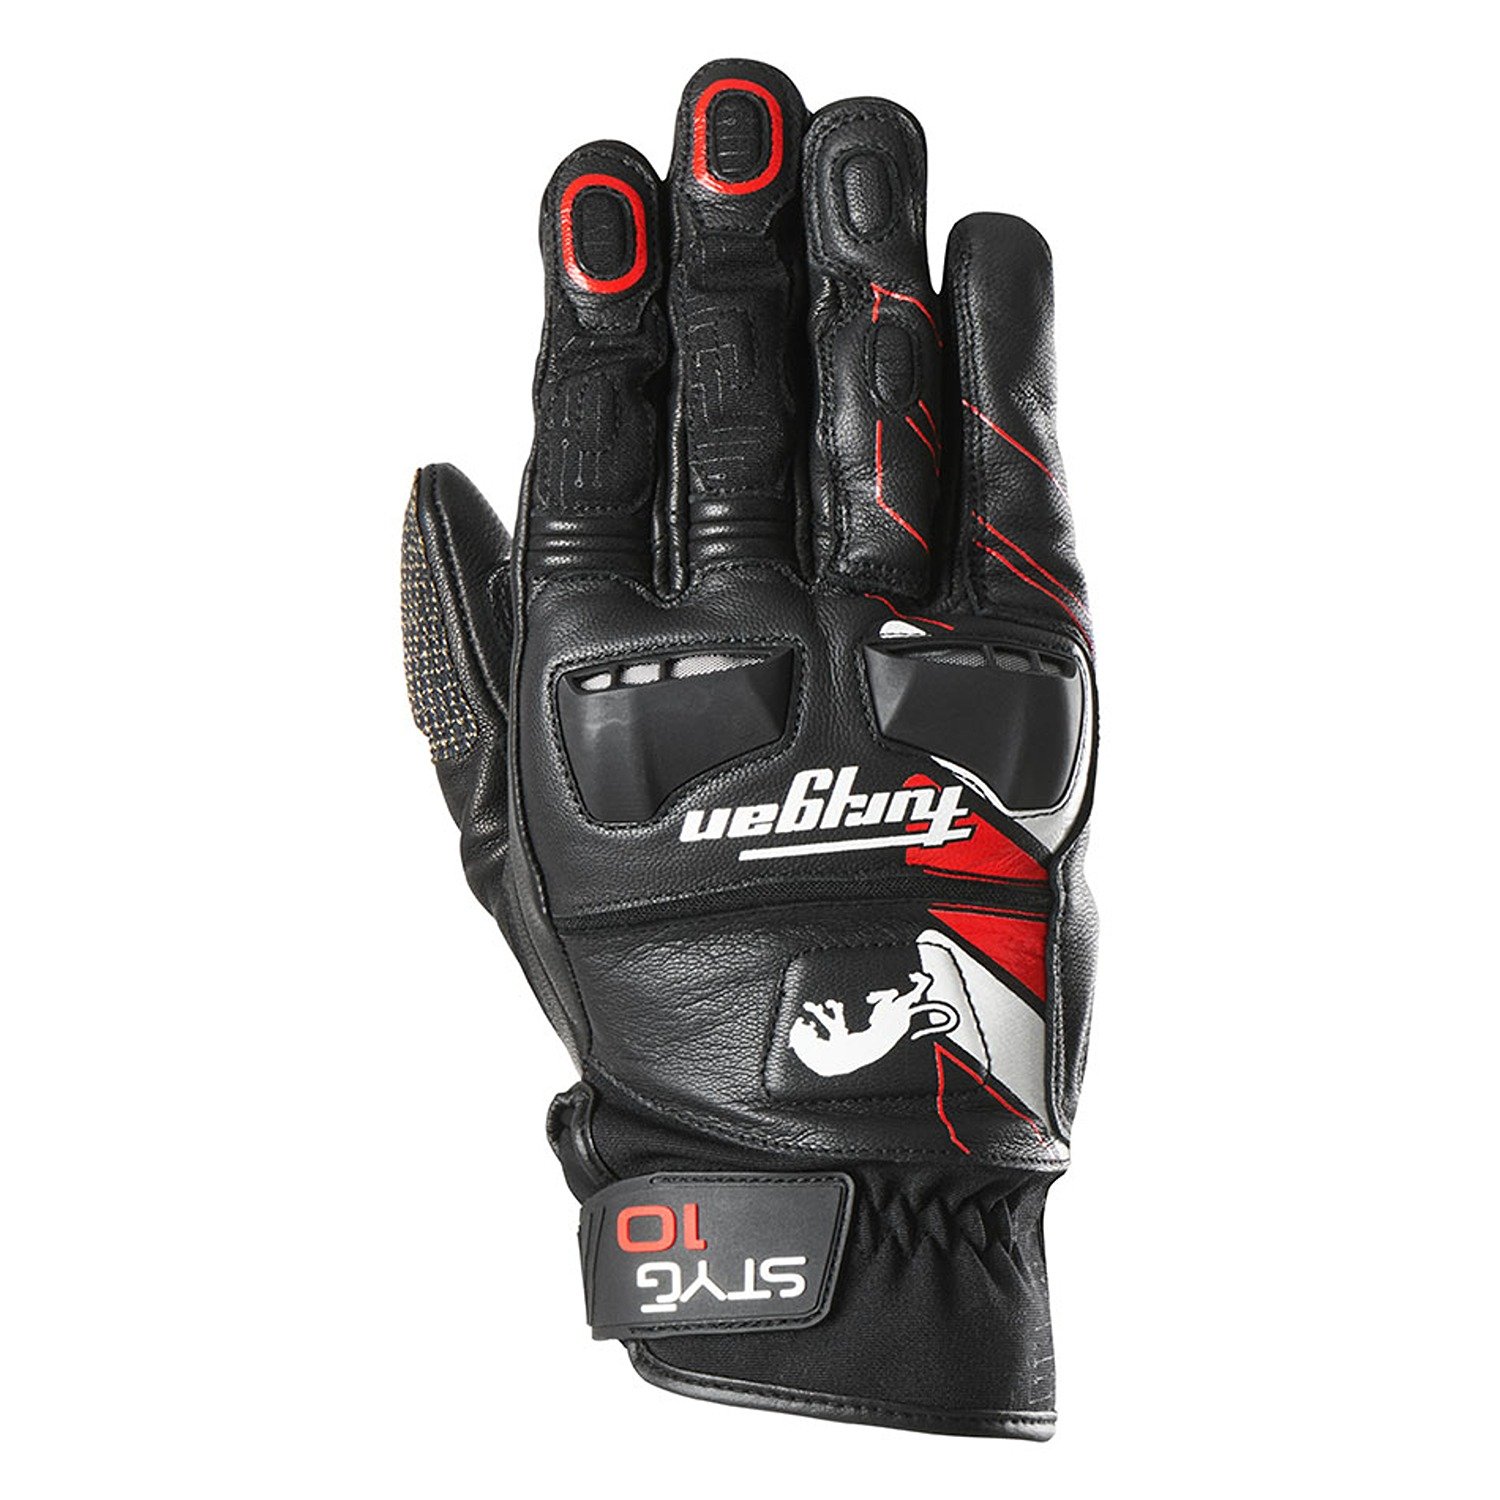 Image of Furygan Styg10 Gloves Black White Red Size 2XL EN